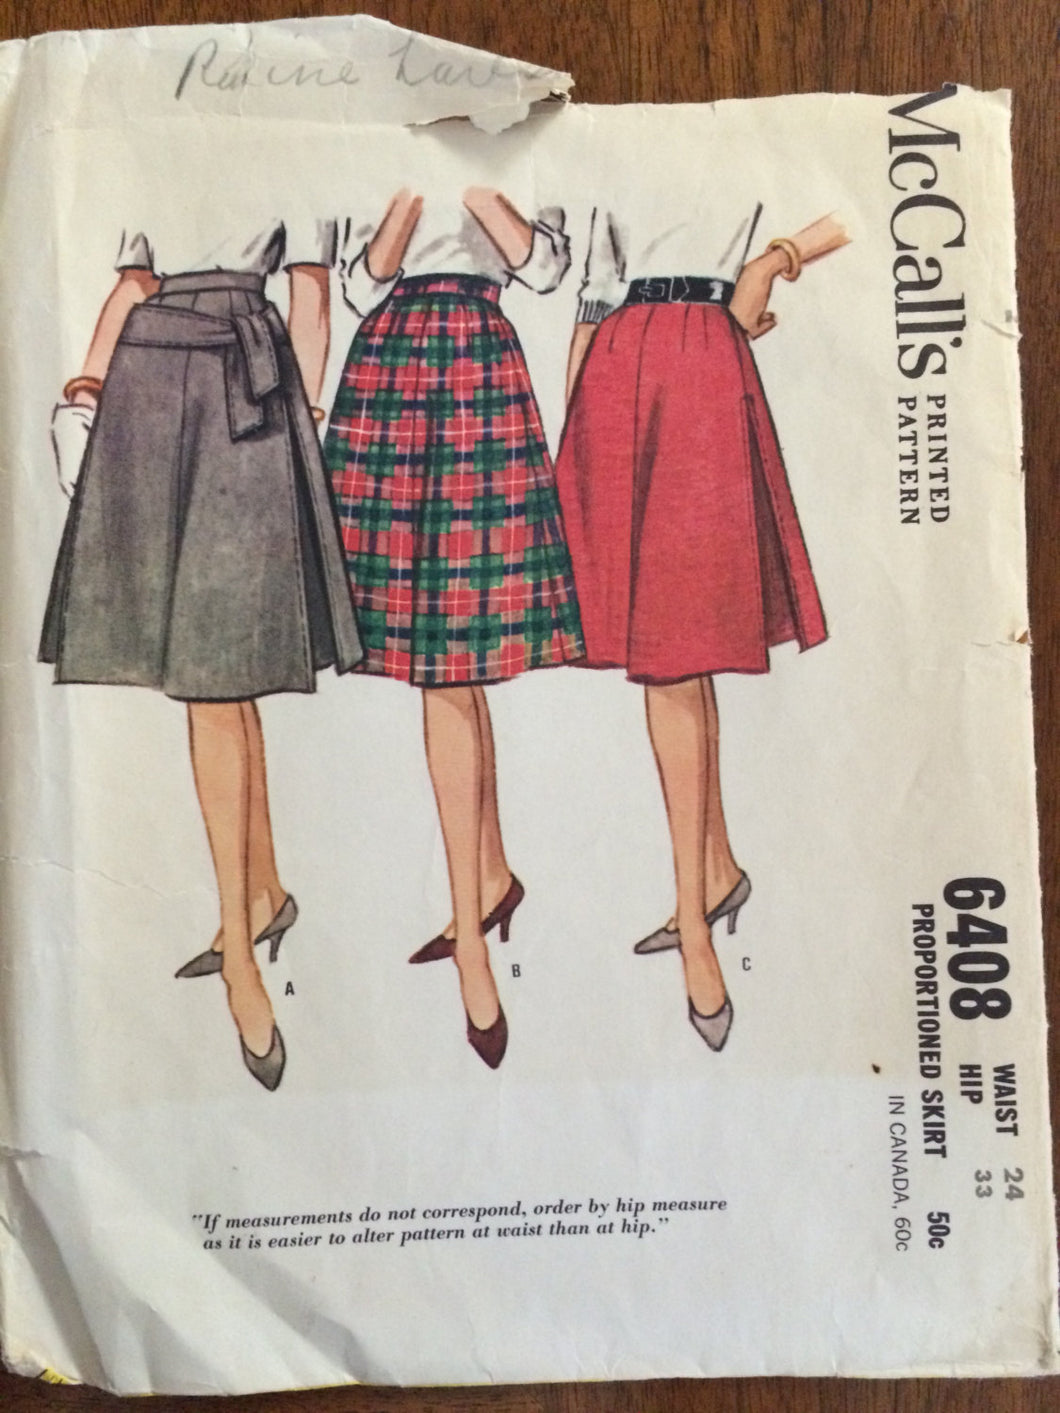 1960's Skirt Pattern / Vintage Sewing Pattern / McCall's 6408 / Waist 24 / Hip 33 / Flared Skirt / 4 Gore Skirt / Side Insets / Knee Length